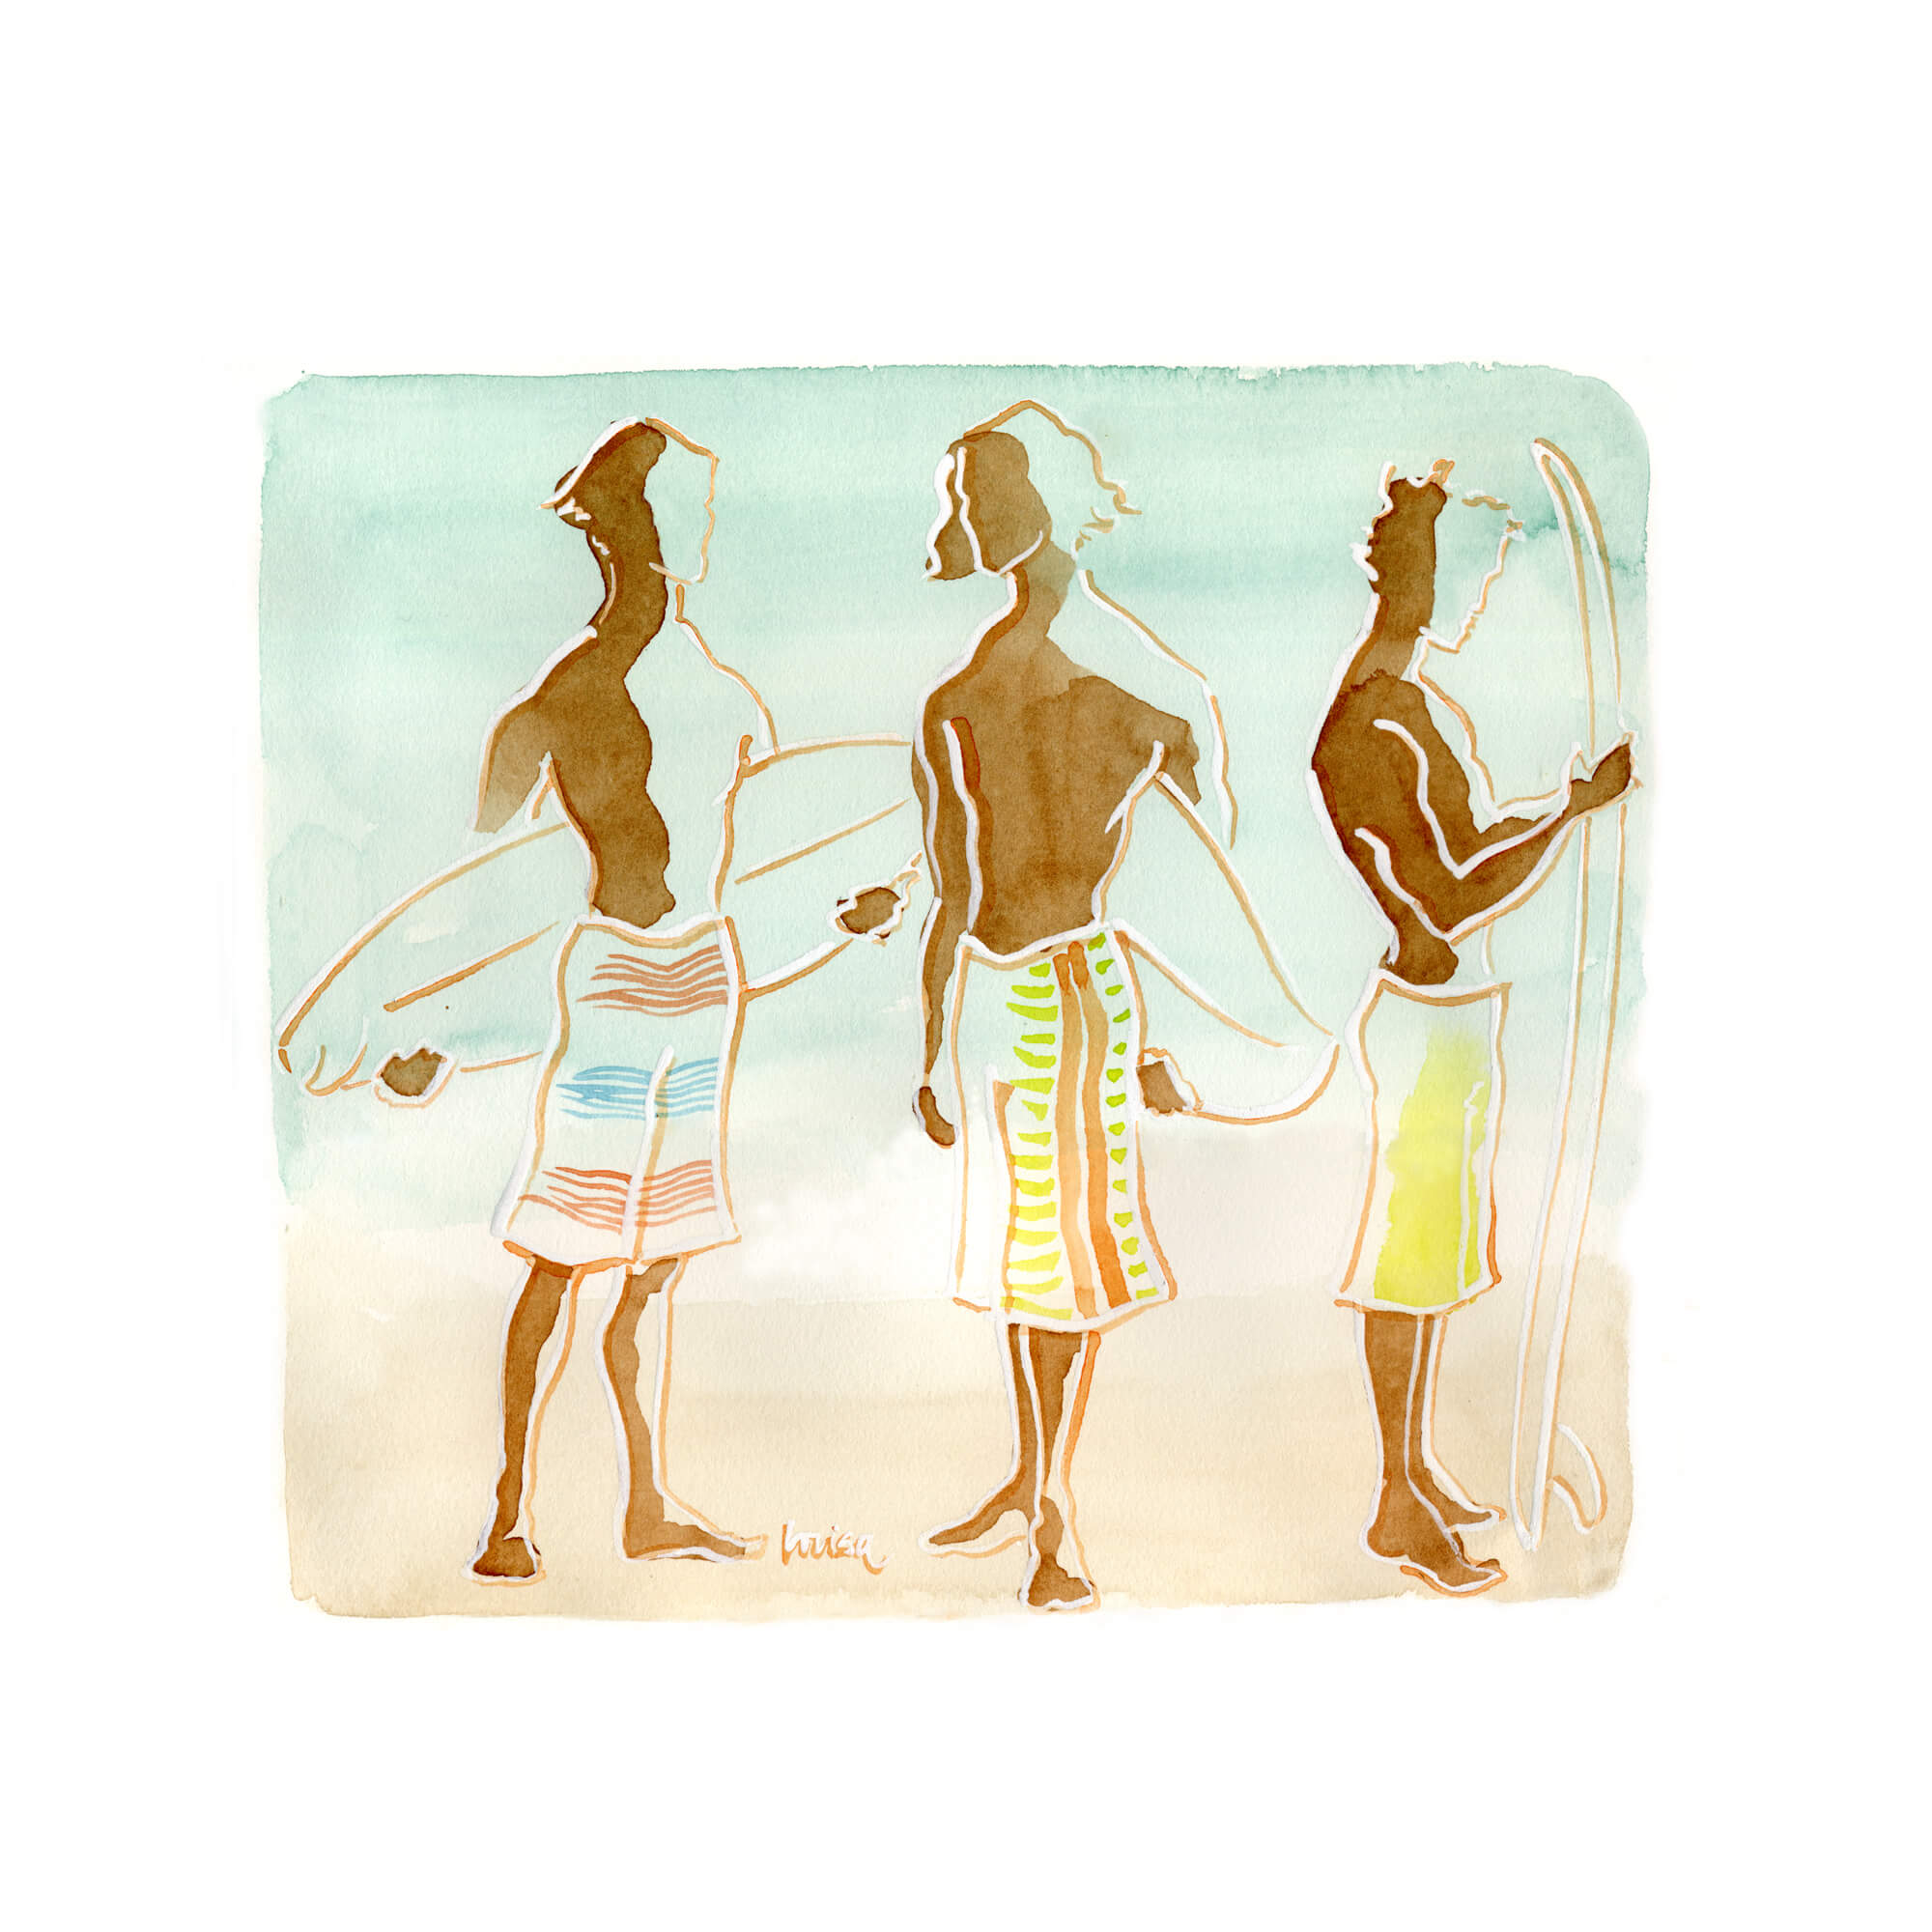 An original watercolor artwork of three men surfer by Hawaii artist Lovisa Oliv